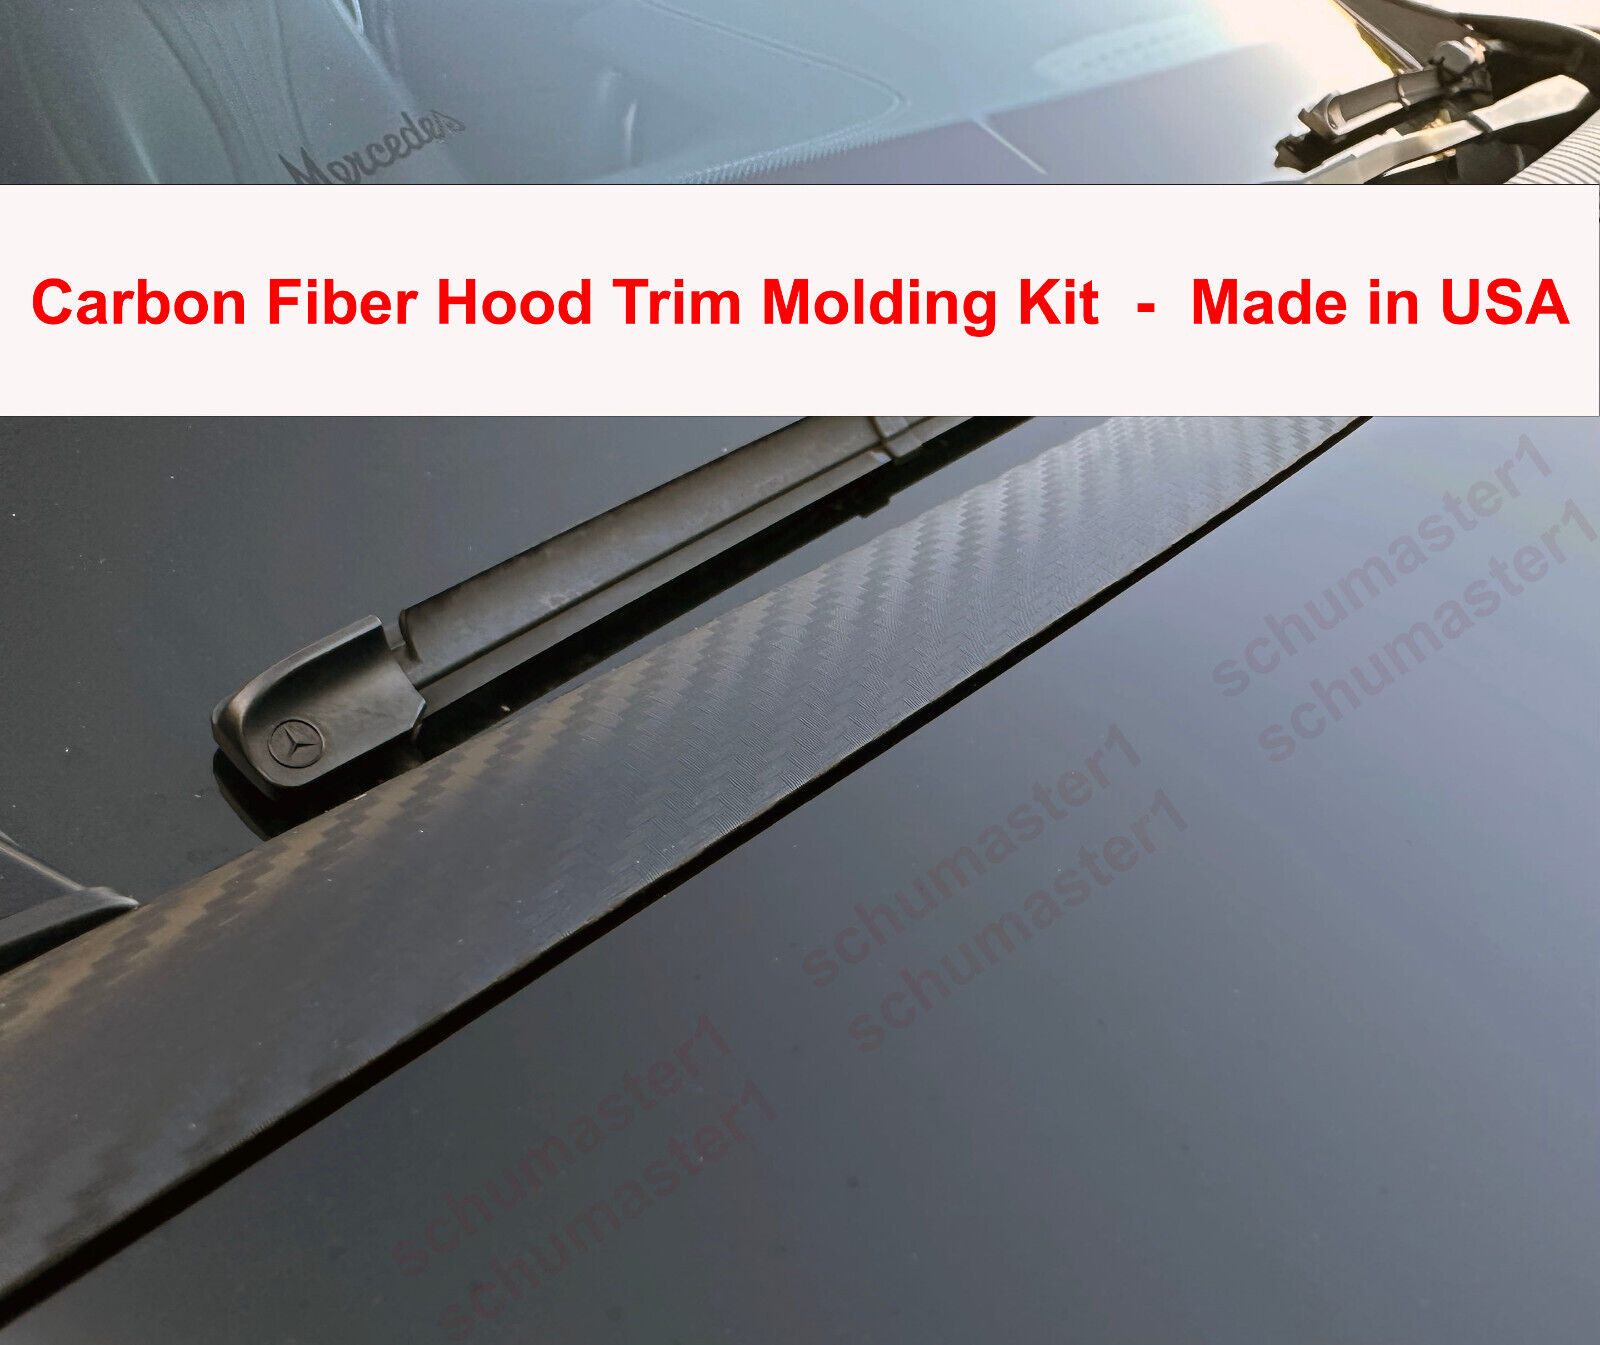 1pc Flexible CARBON FIBER Hood Trim Molding Kit - ForVolkswagen VW vehicles